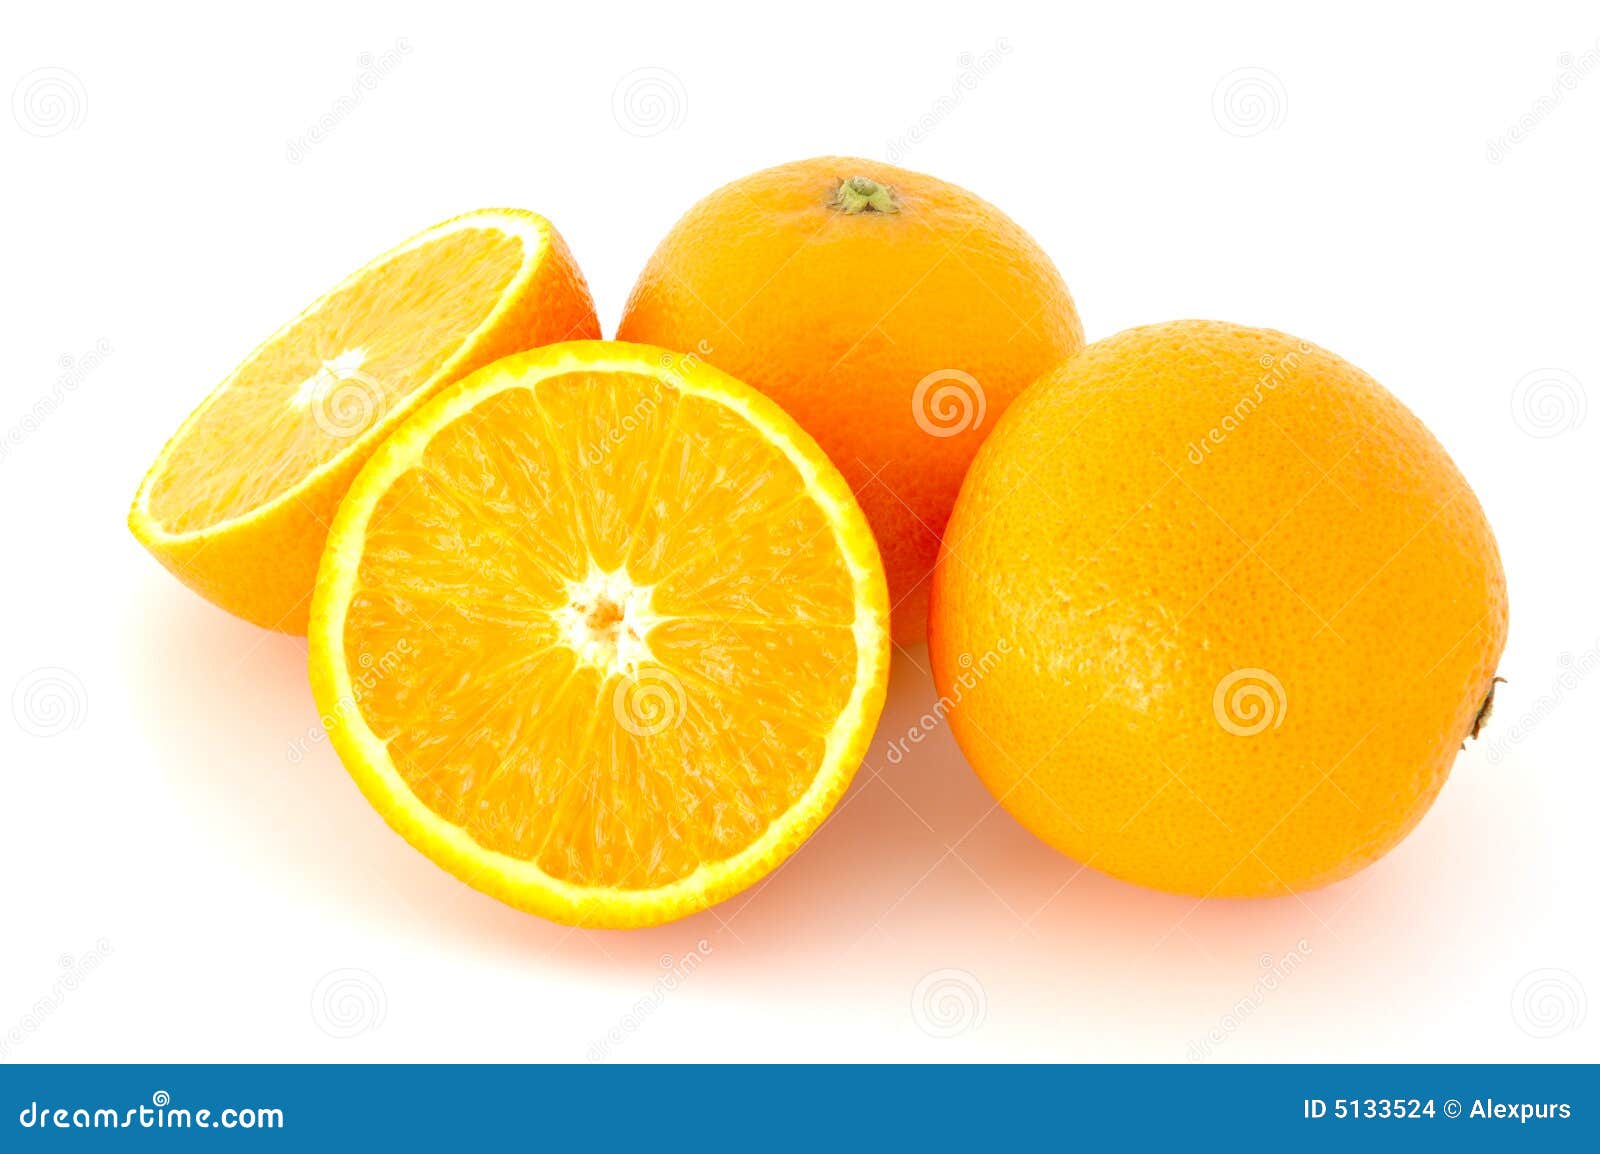 few juicy oranges.